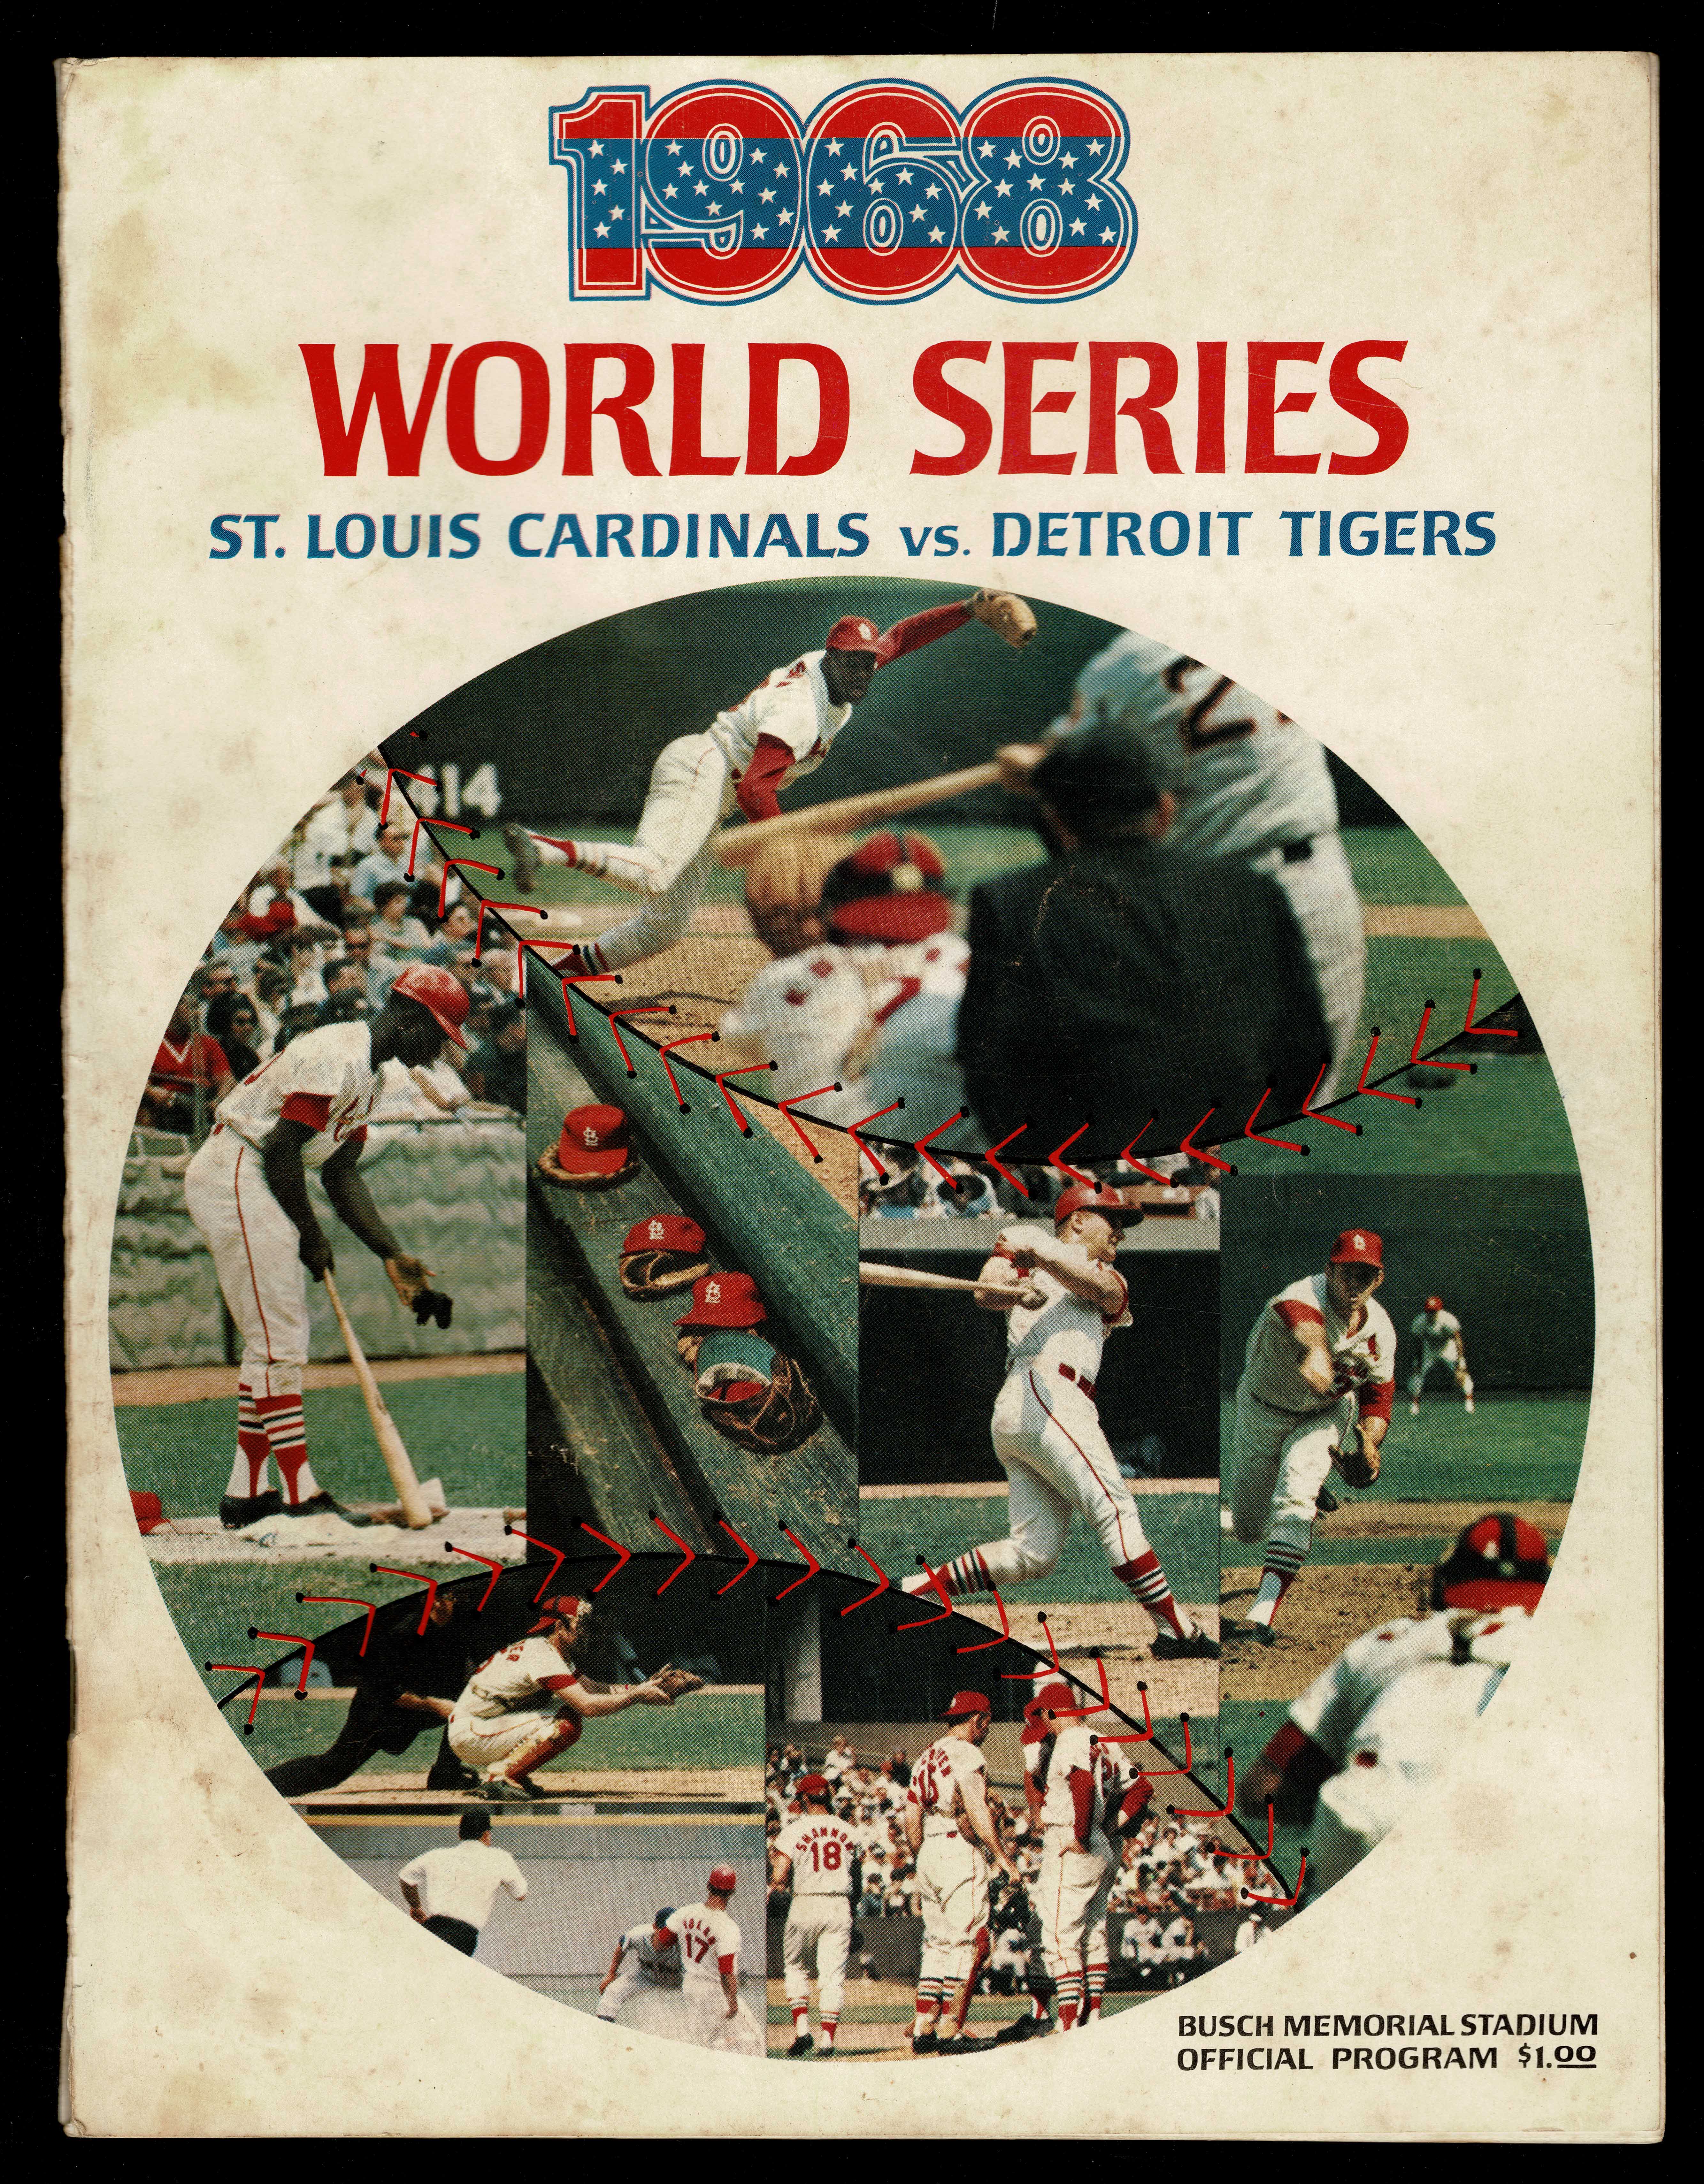 1968 World Series Program - St. Louis